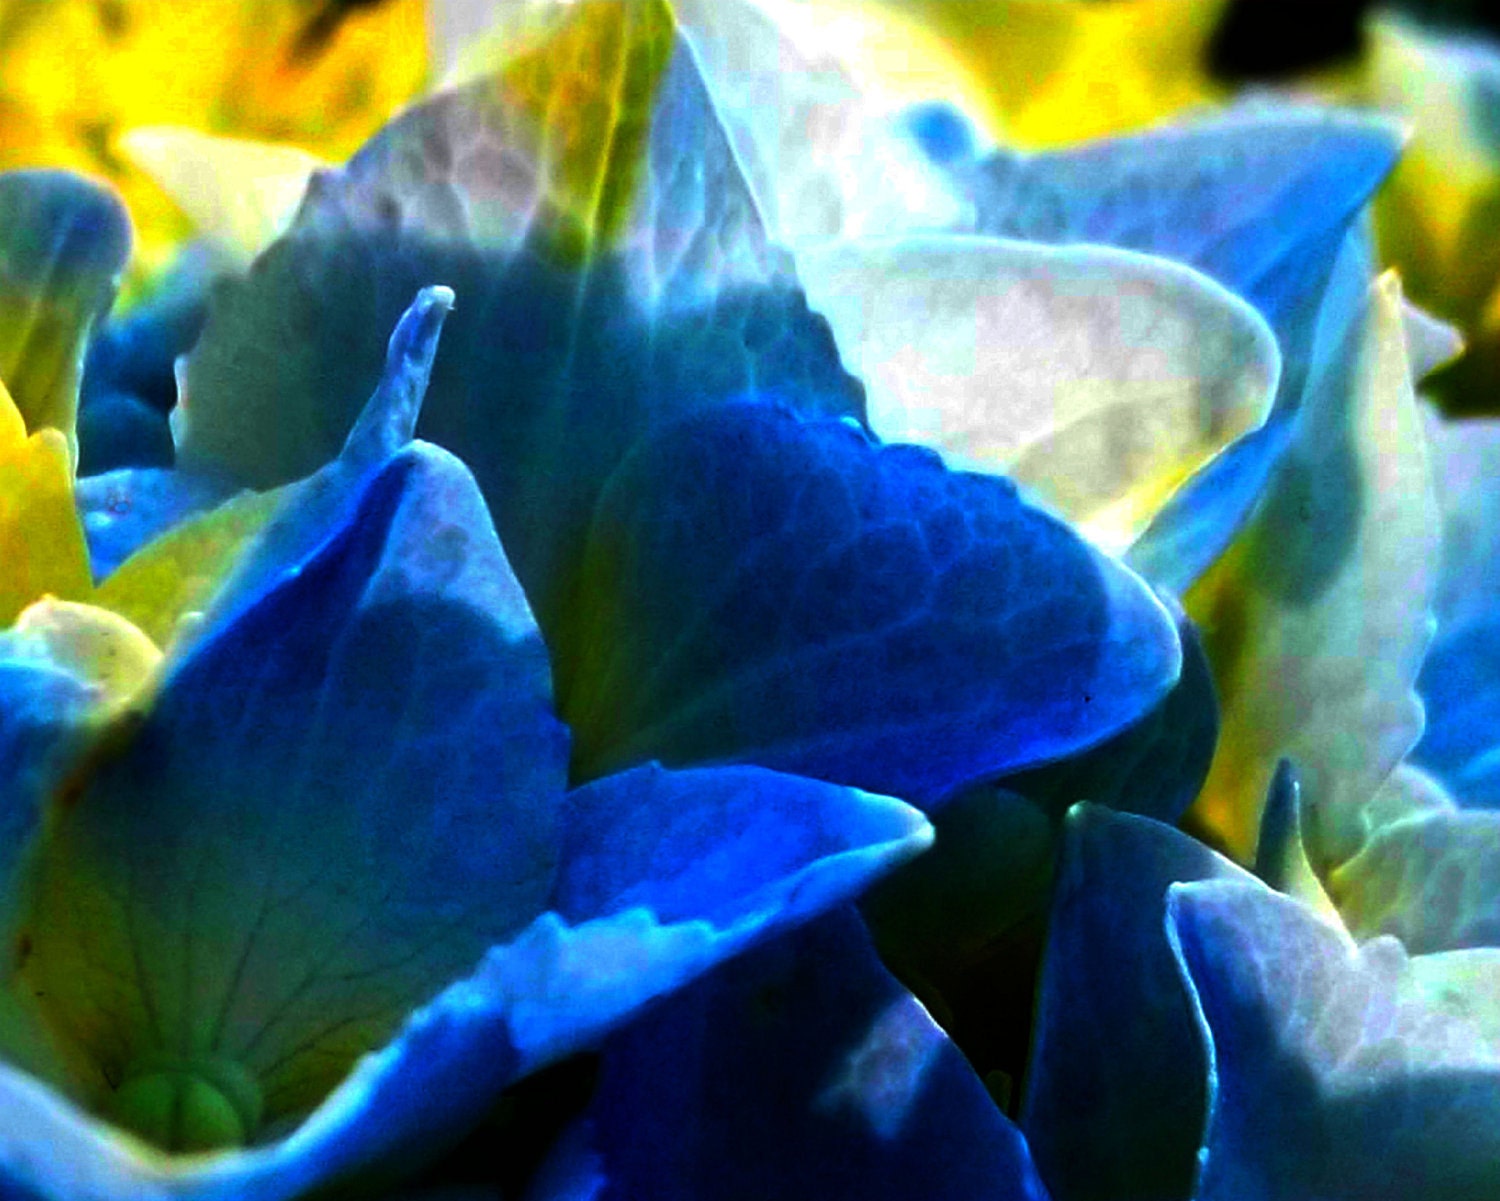 Hydrangea 5 x 7 Photo Art Vivid Color Blues Yellows Creams Flowers Gardening